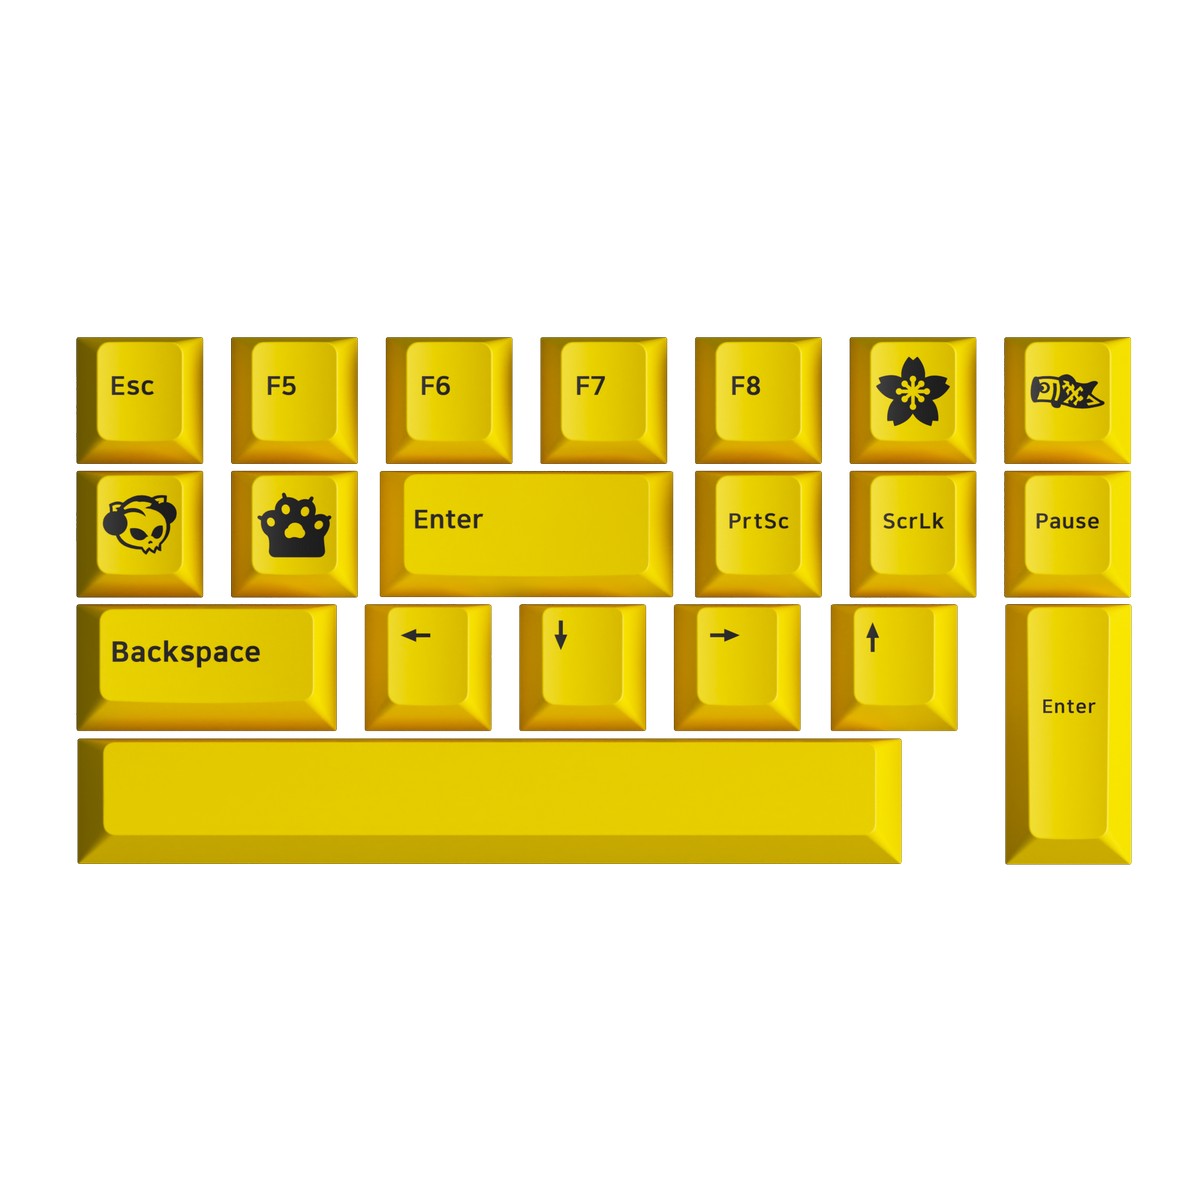 Akko - AKKO 3068B Plus Black&Gold USB RGB Mechanical Gaming Keyboard CS Jelly Purple Switch UK ISO